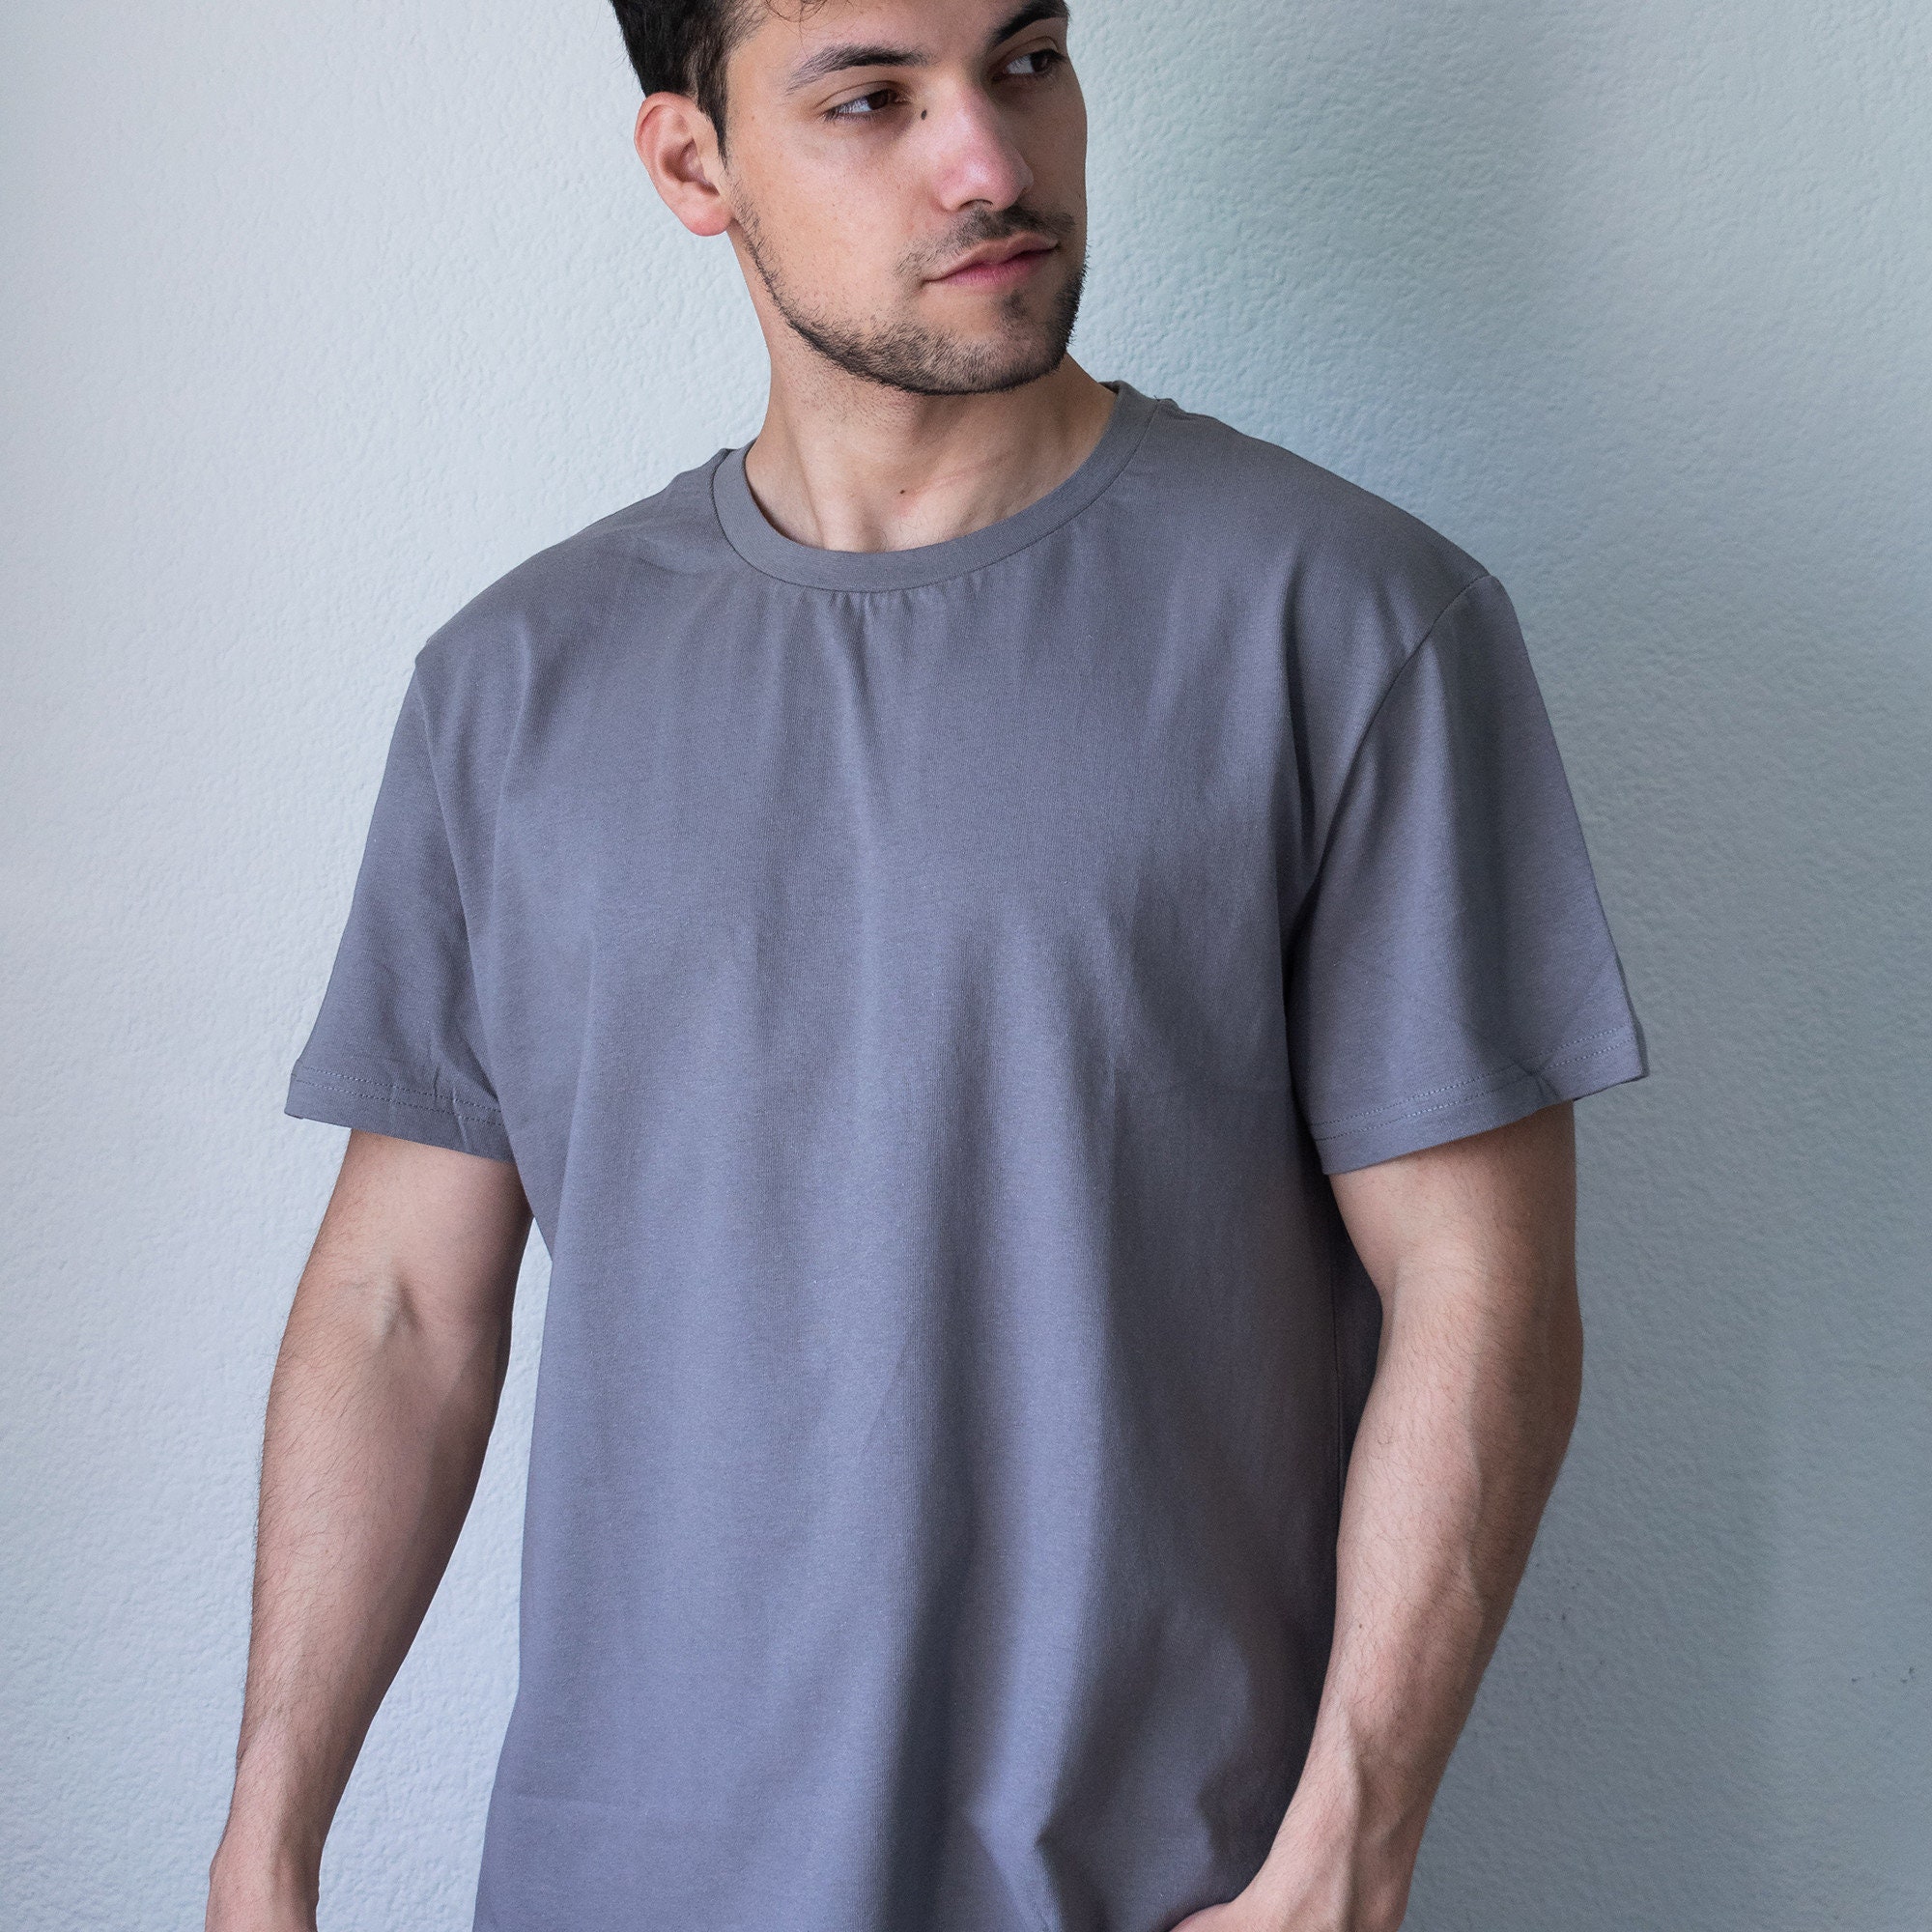 Gray Hemp T-shirt, Crew, Soft, Comfortable, Eco-friendly 